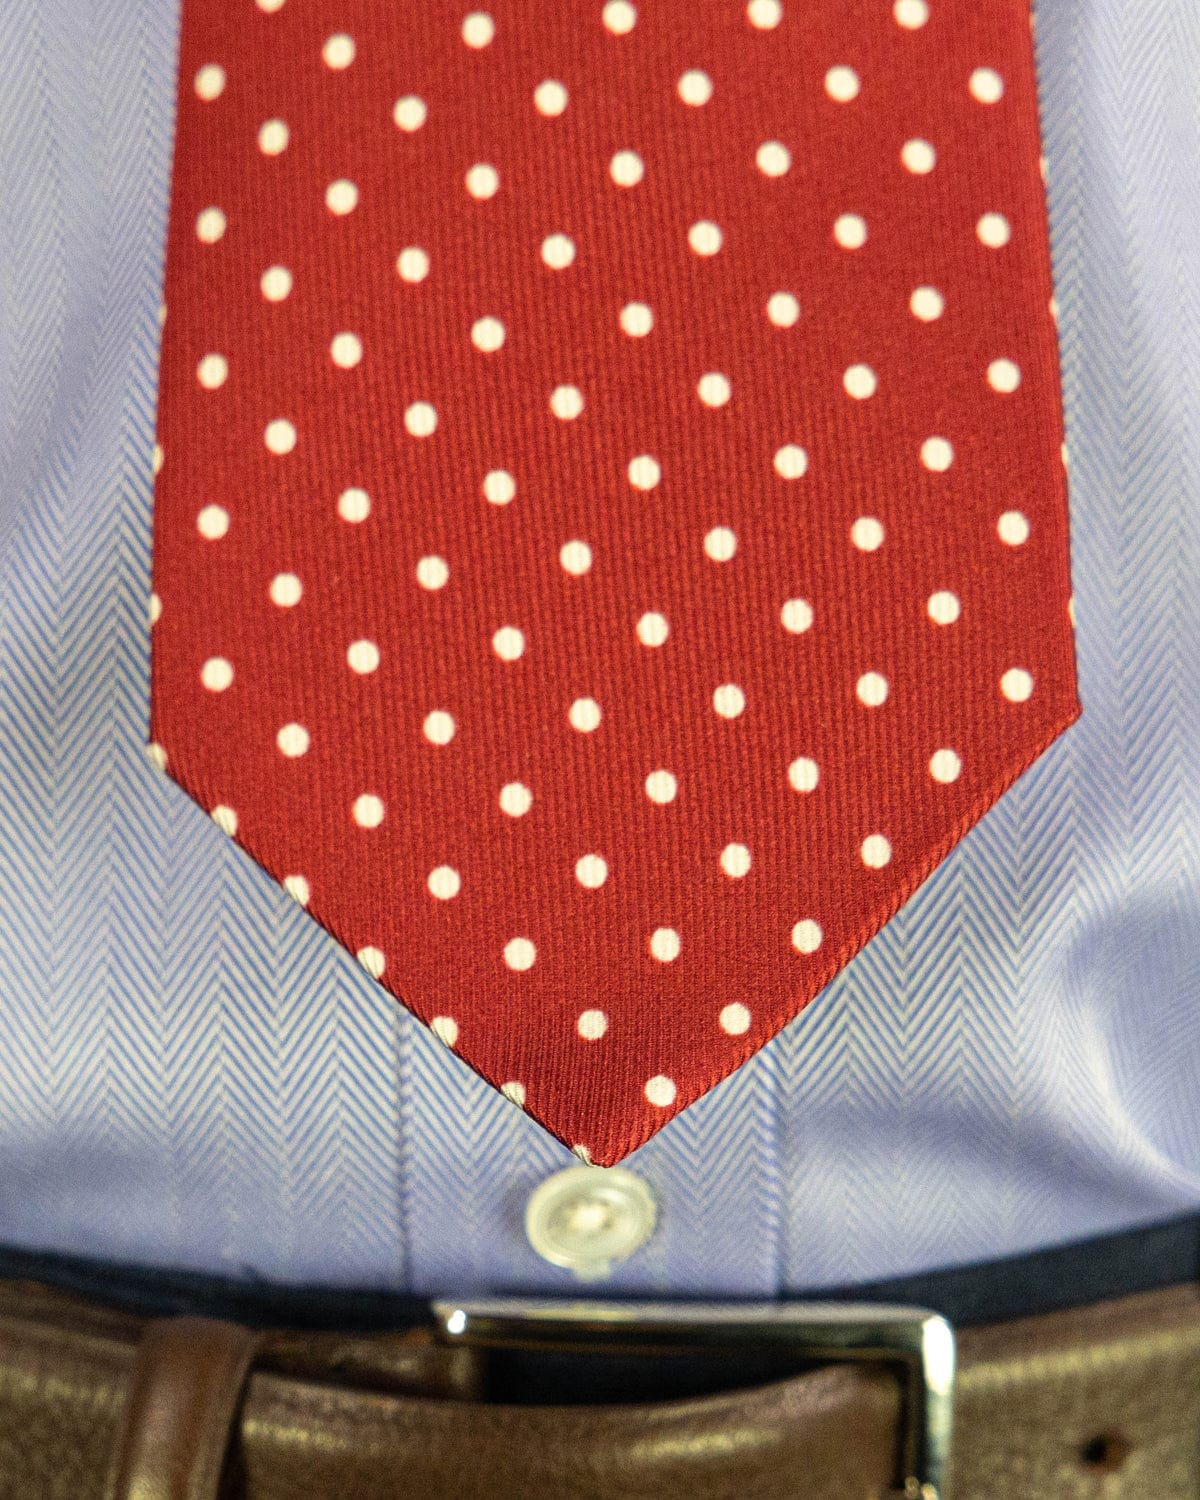 Deep Red Printed Silk Tie with White Medium Spots